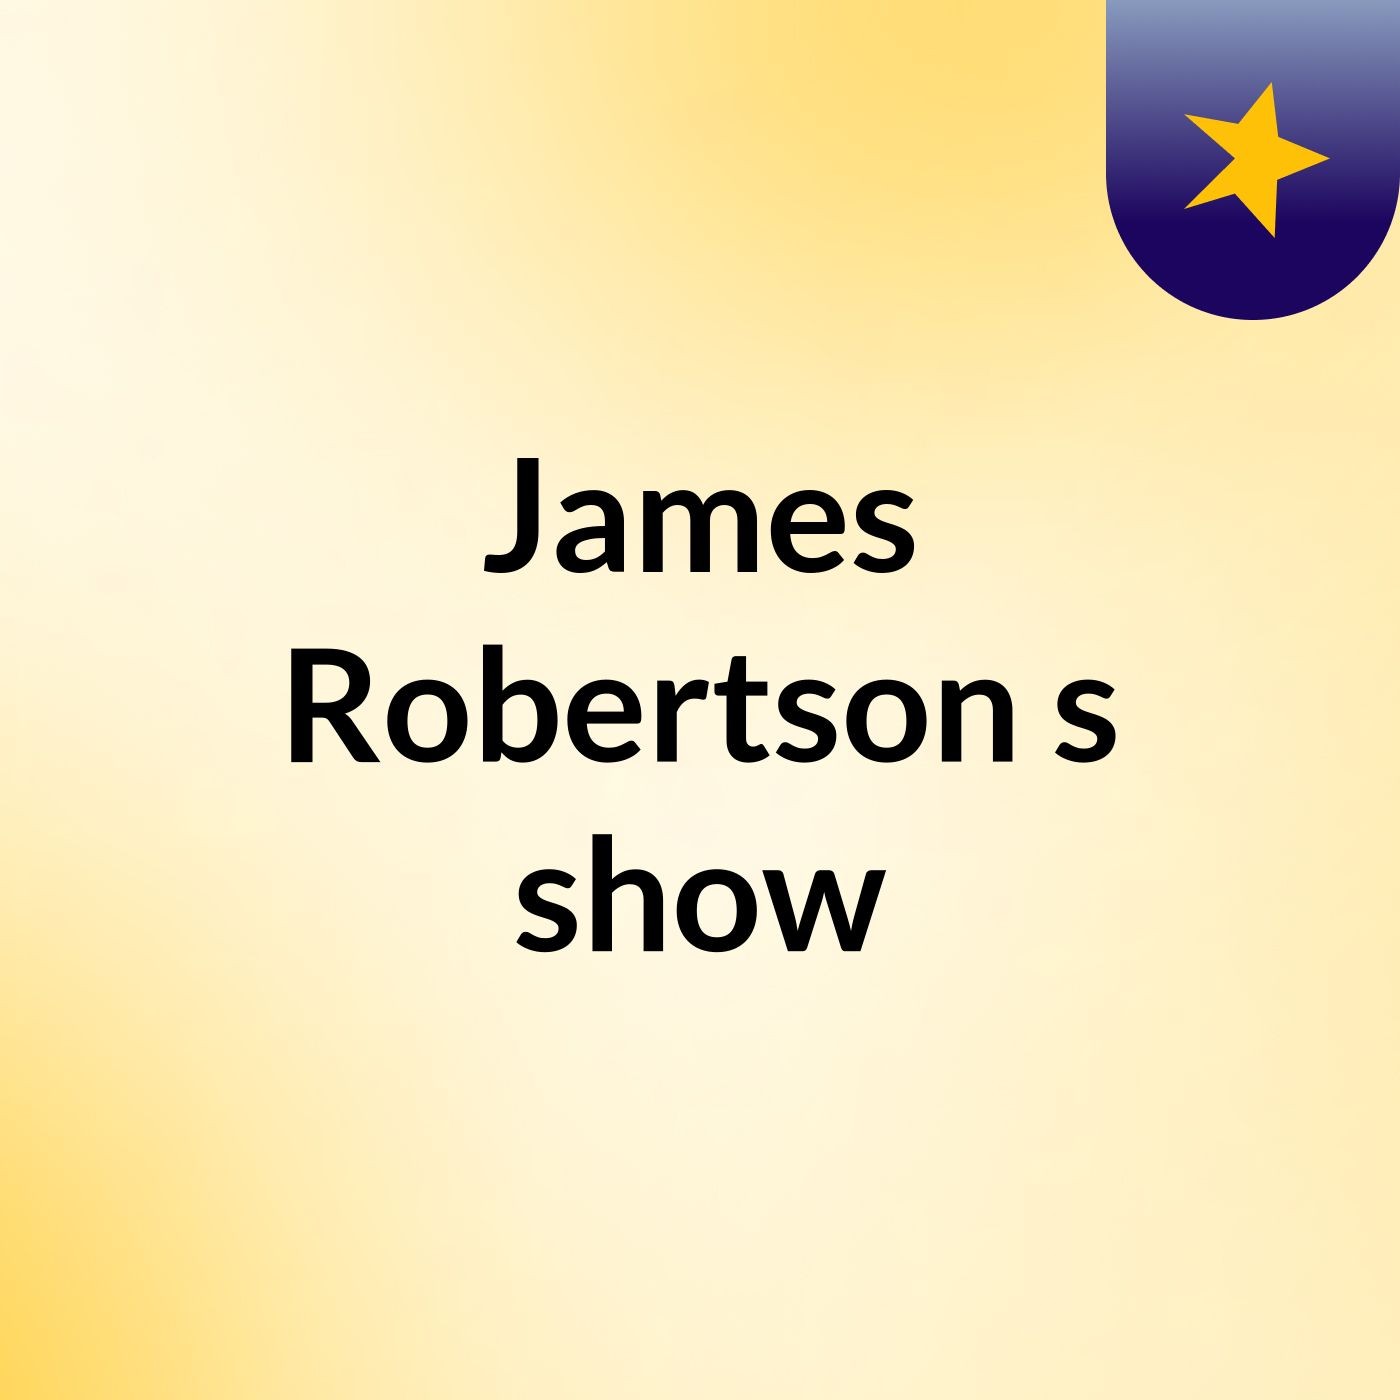 James Robertson's show